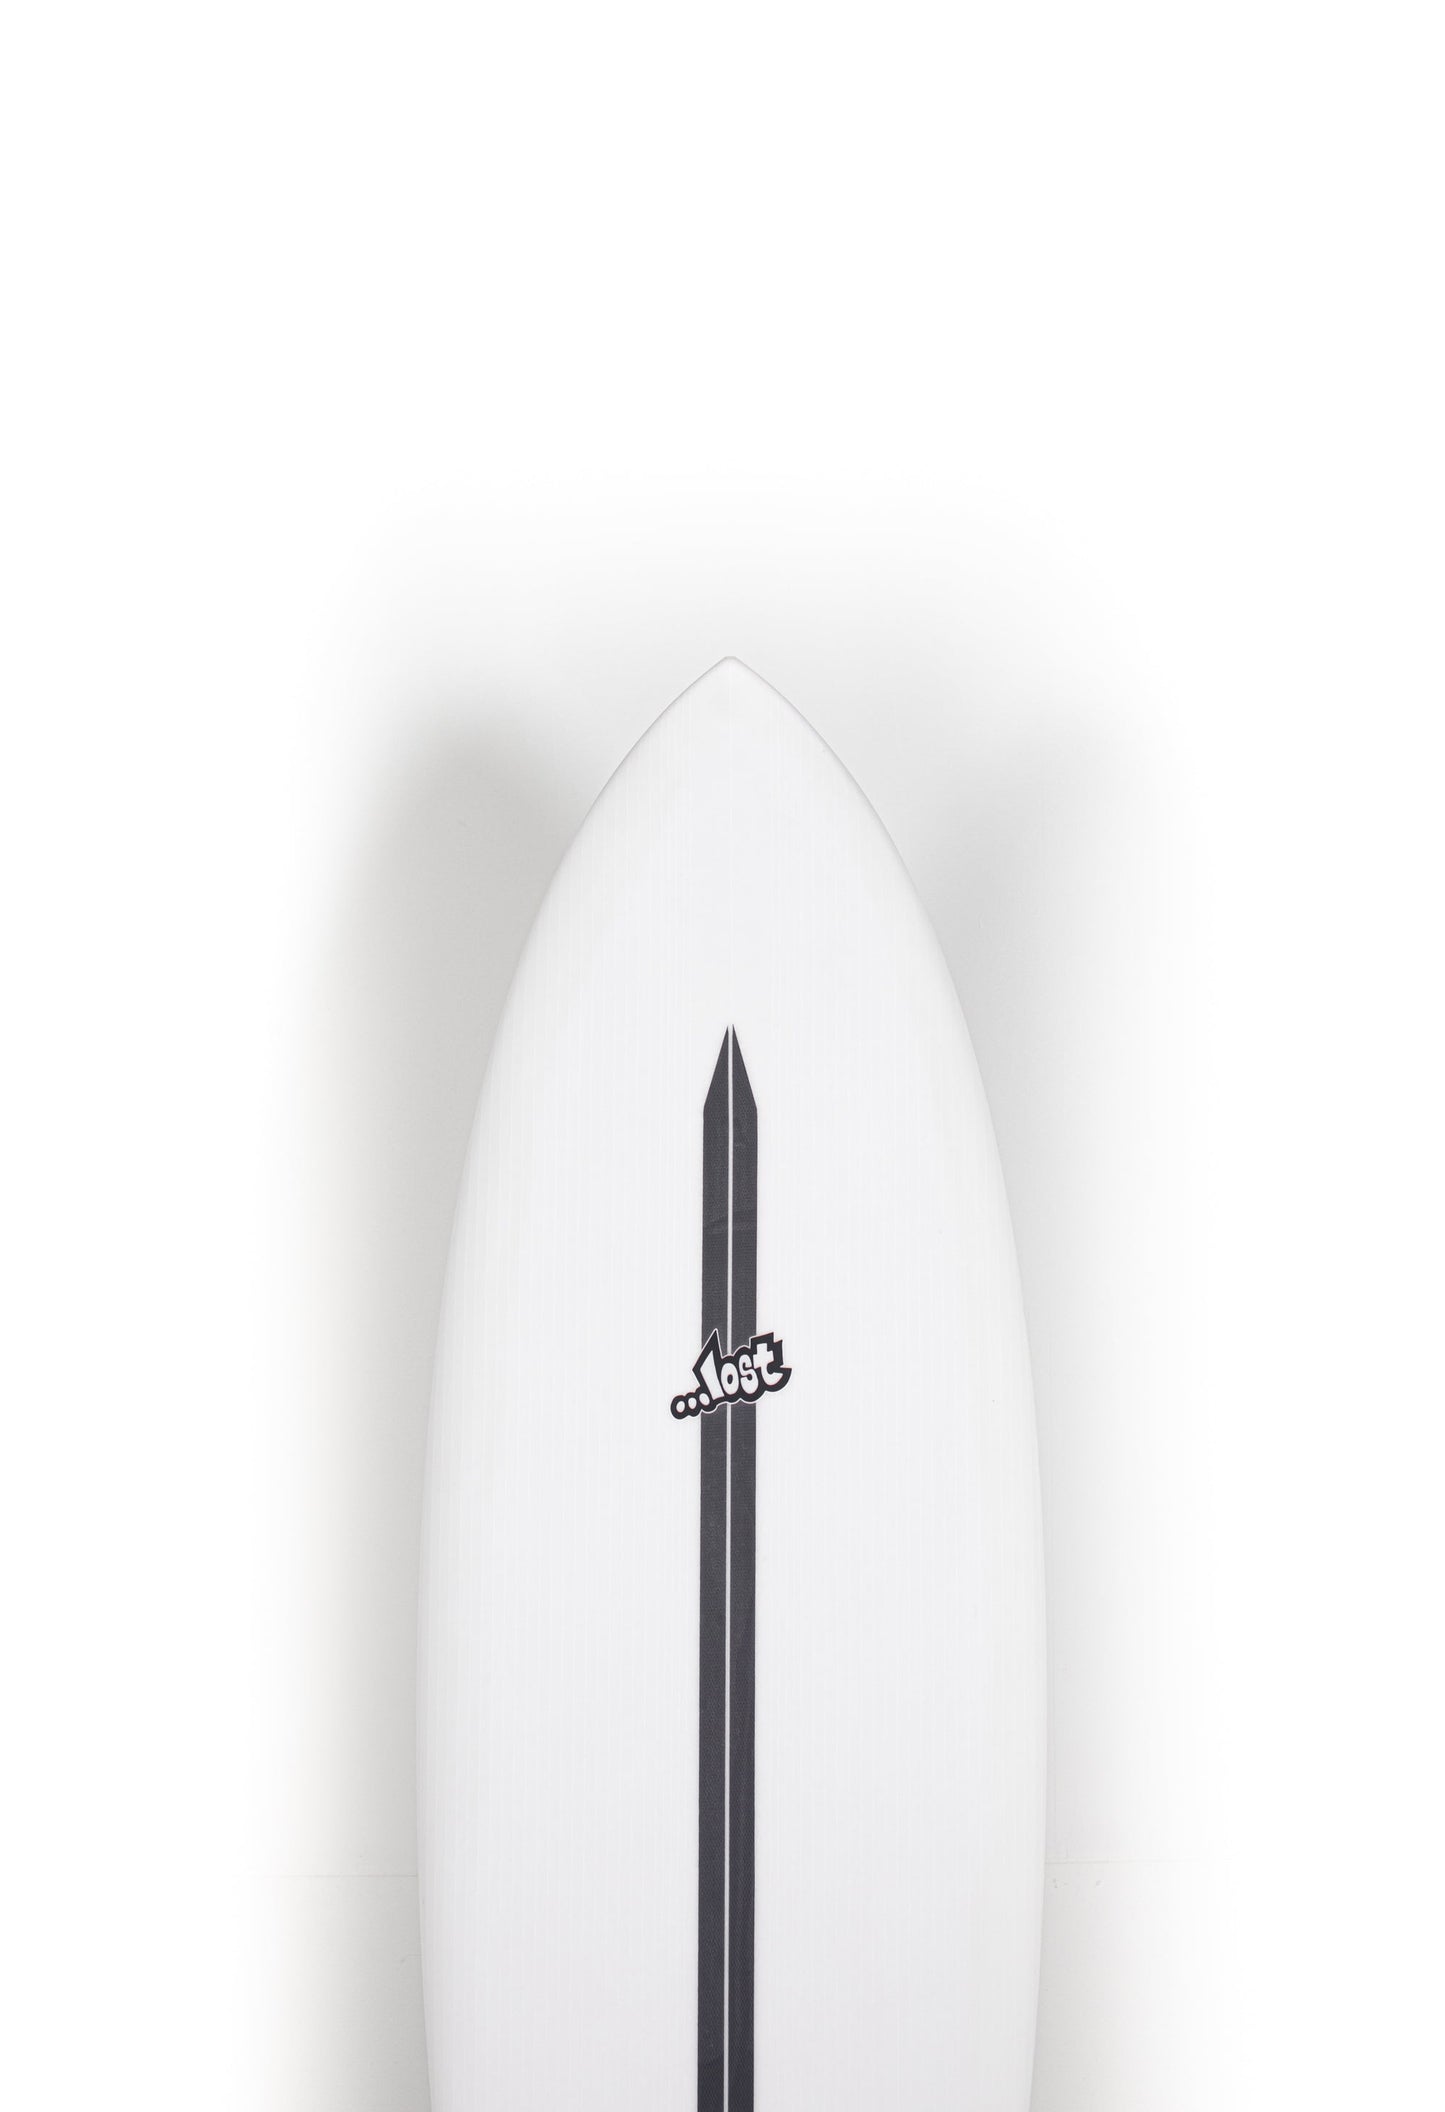 
                  
                    Pukas Surf Shop Lost Surfboards RNF96 5'6"
                  
                